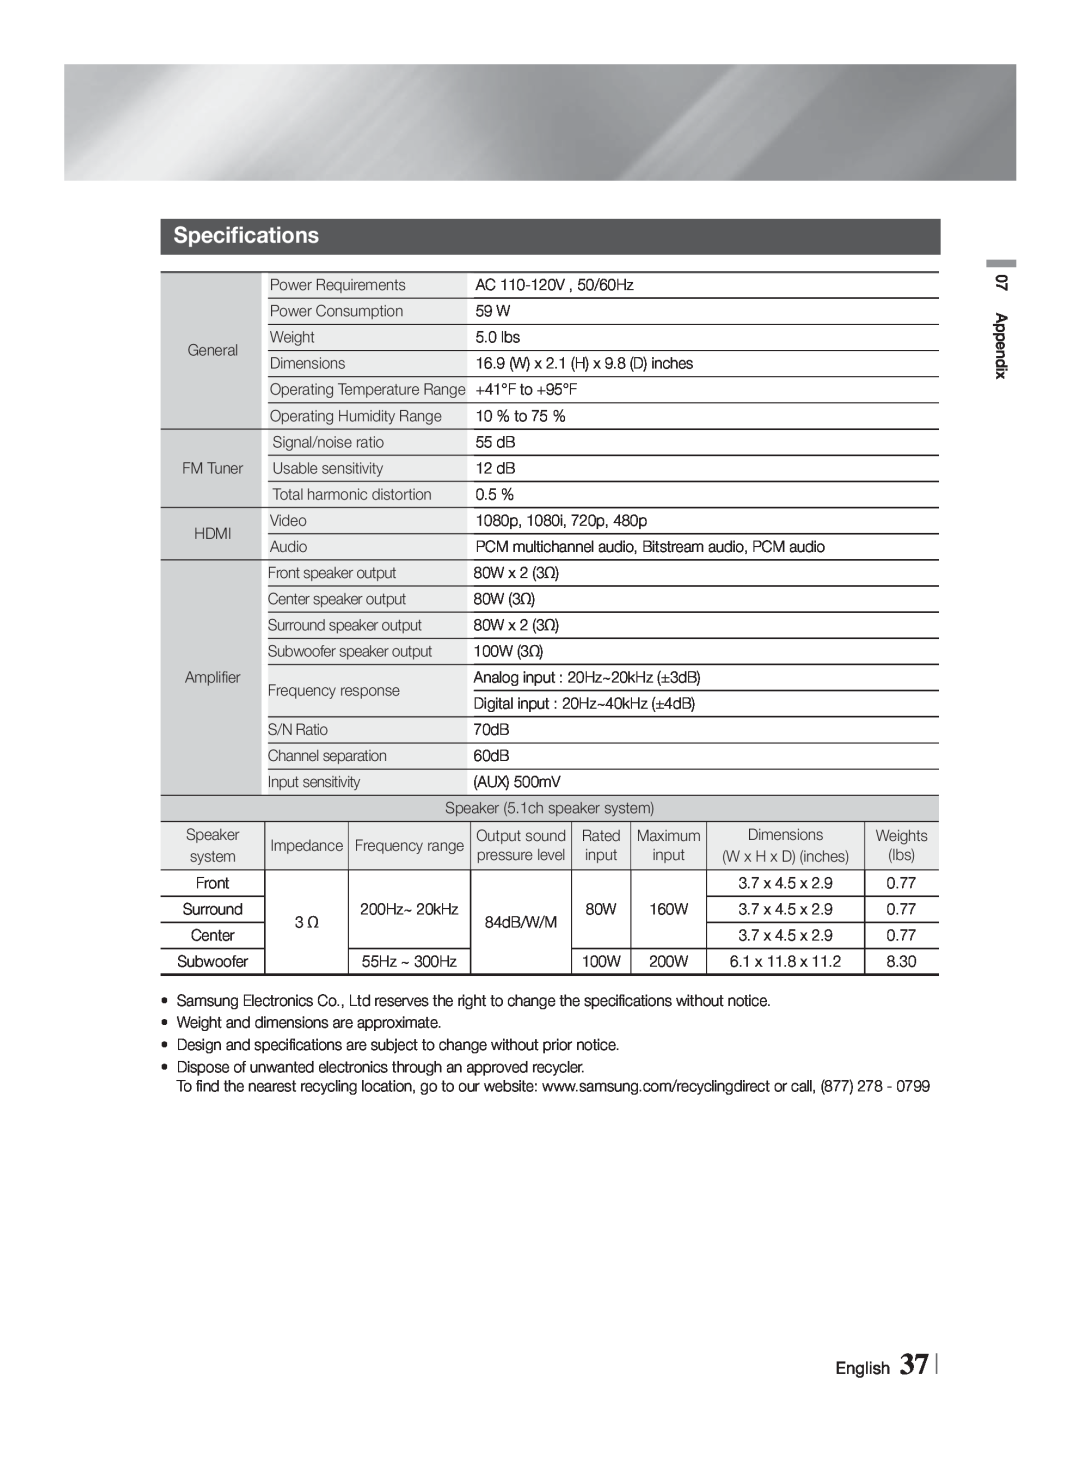 Samsung HTF4500ZA user manual Specifications, English 